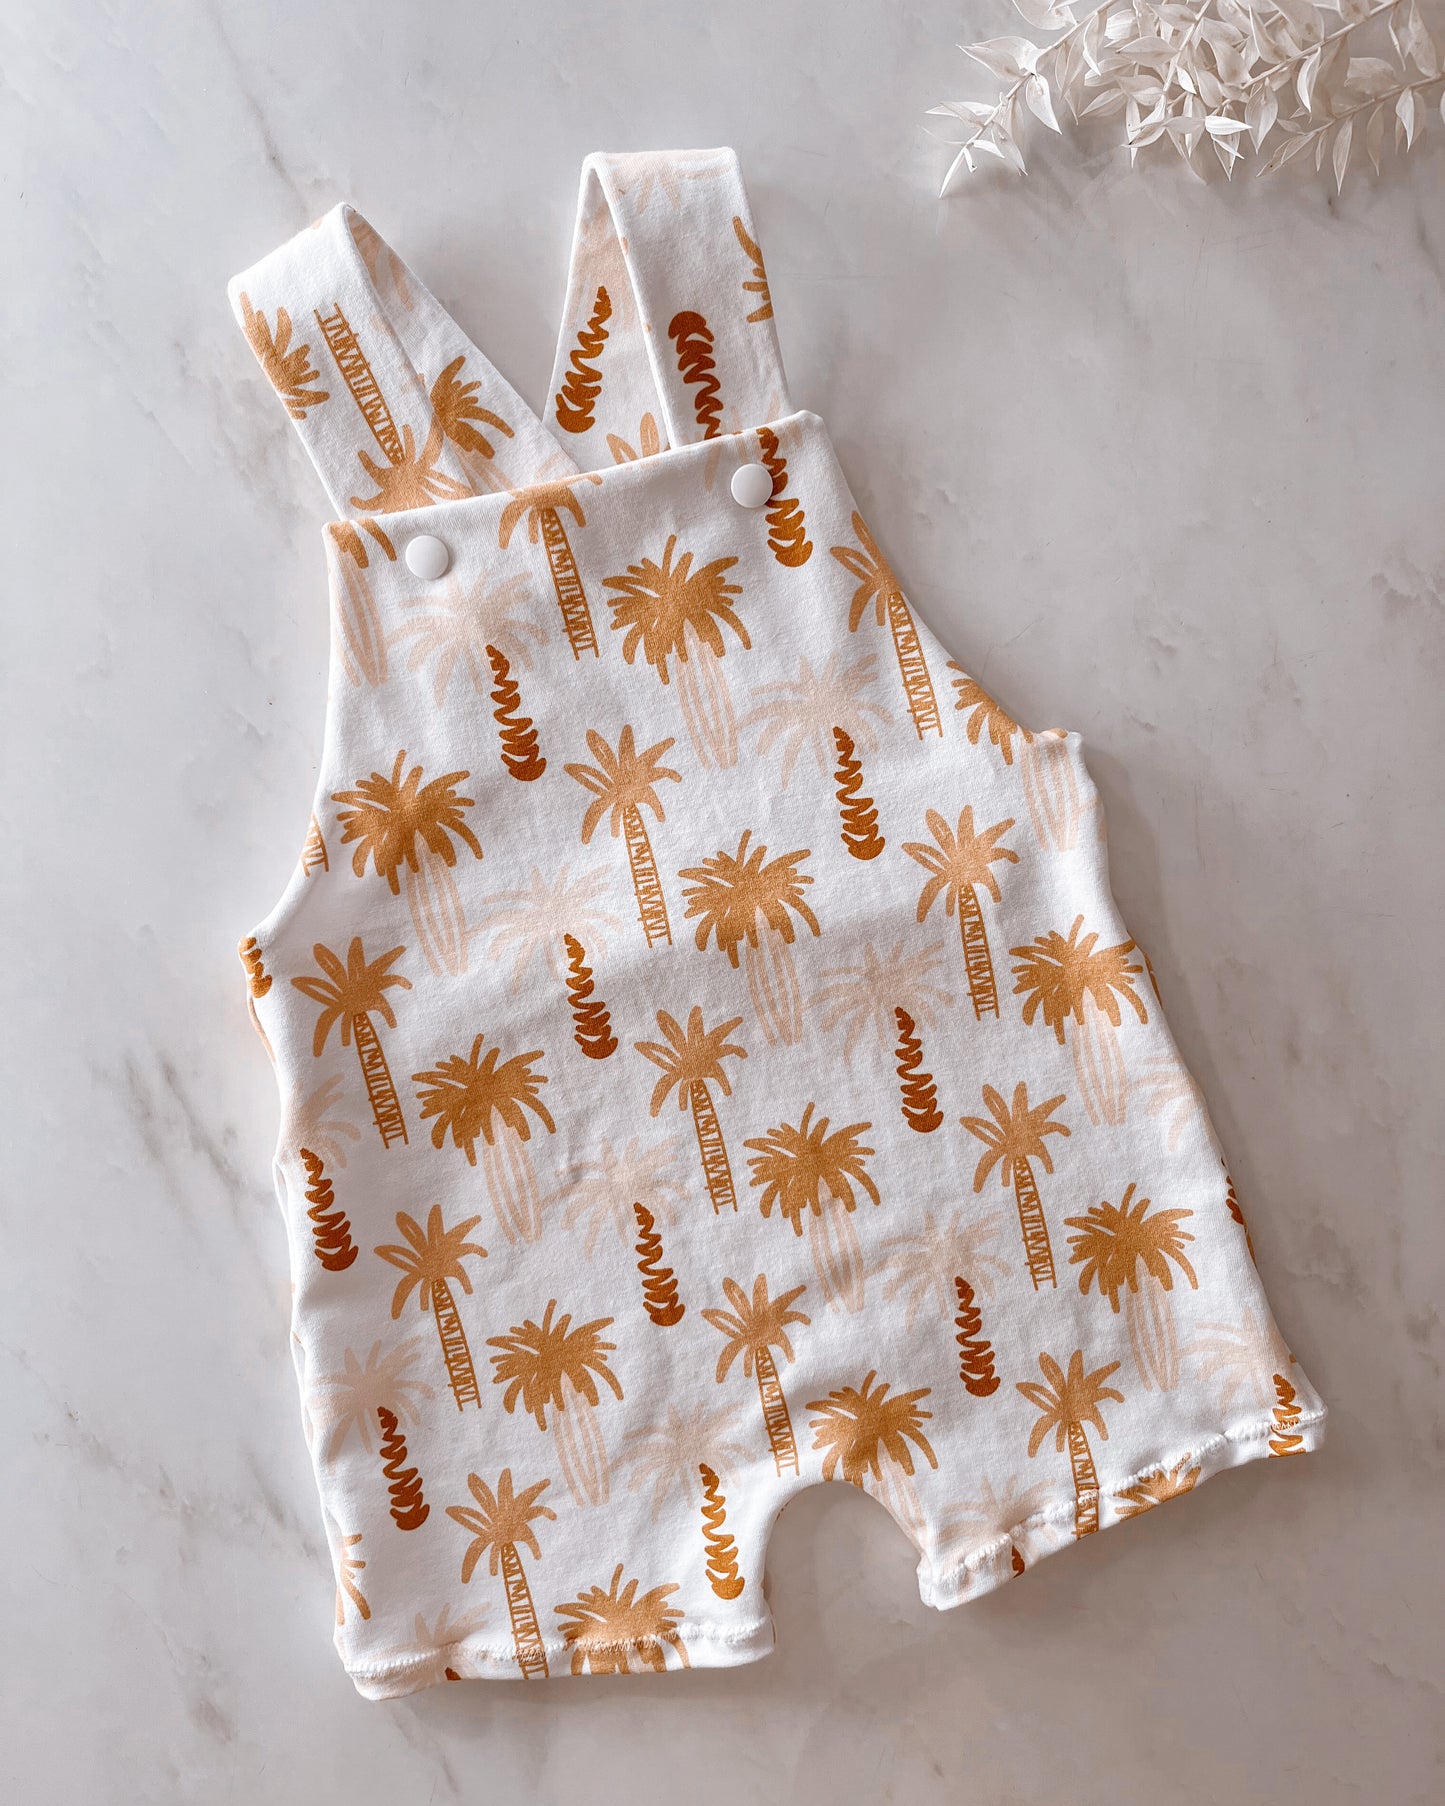 Palm overalls